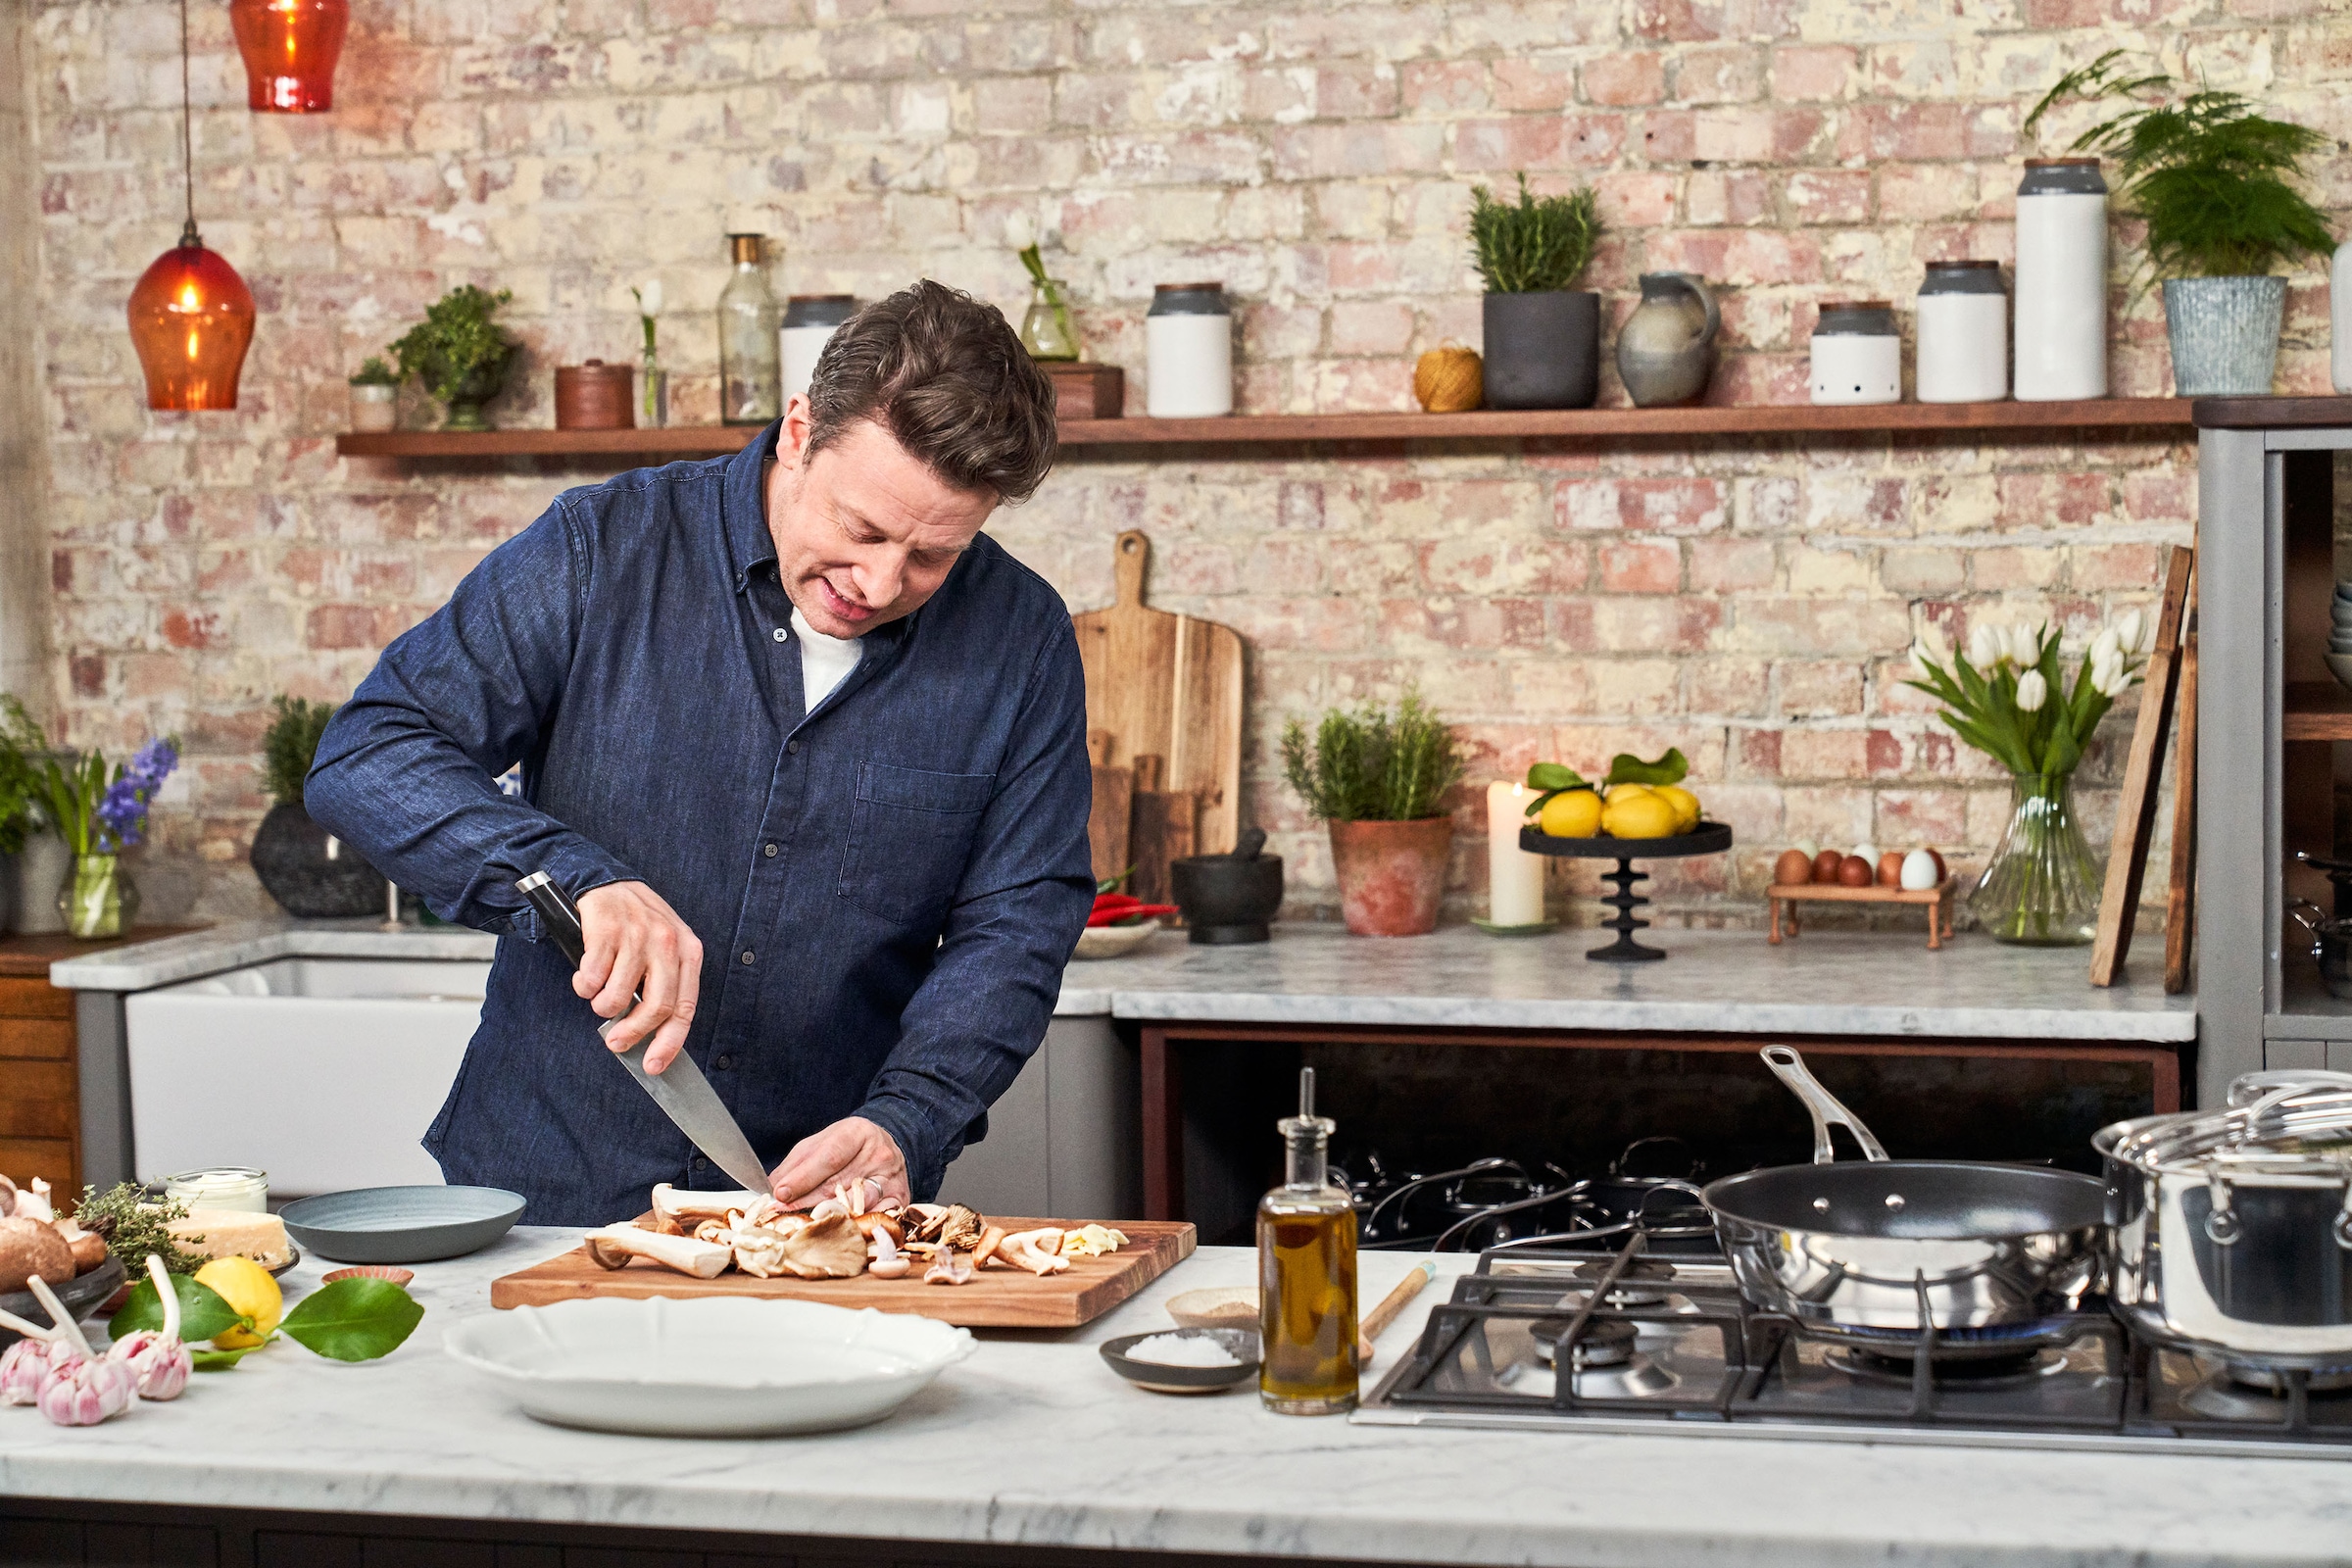 Tefal Topf-Set »E307S7 Jamie Oliver«, Edelstahl, (Set, 7 tlg., je 1x Bratentopf mit Deckel Ø 16/20/24 cm, 1x Stielkasserolle Ø 16 cm), induktionsgeeignet, besonders flacher Deckel